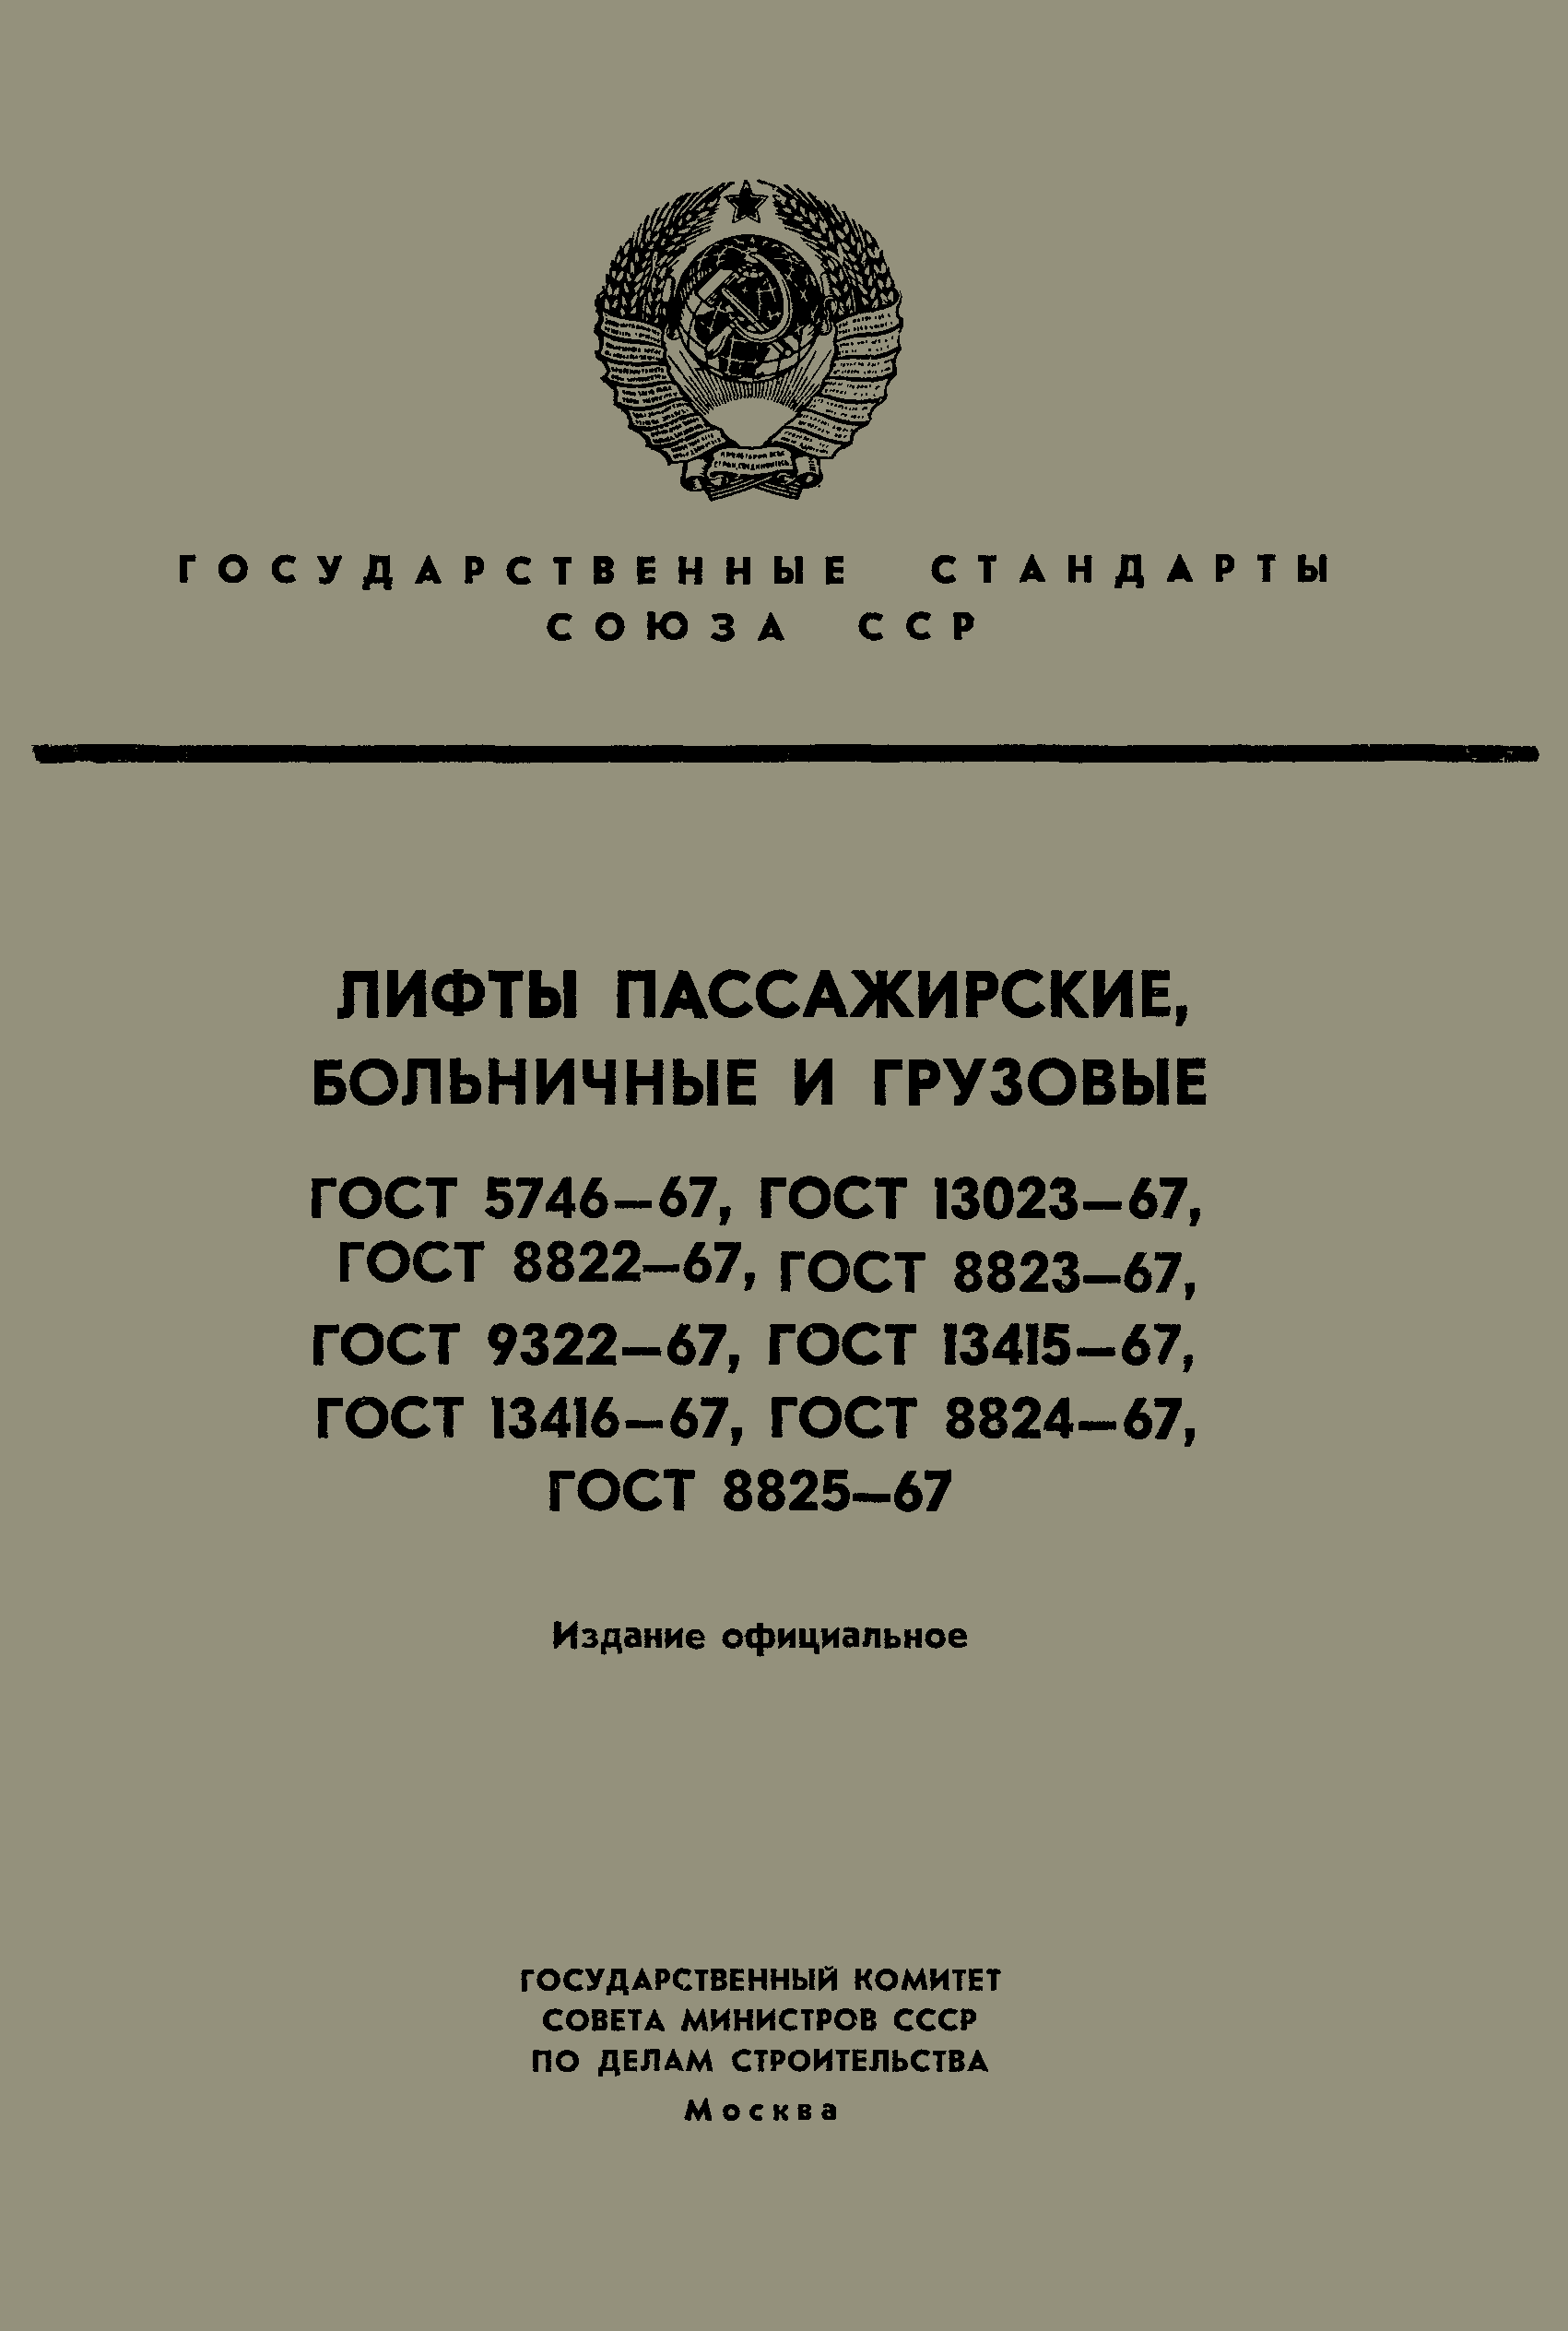 ГОСТ 13416-67